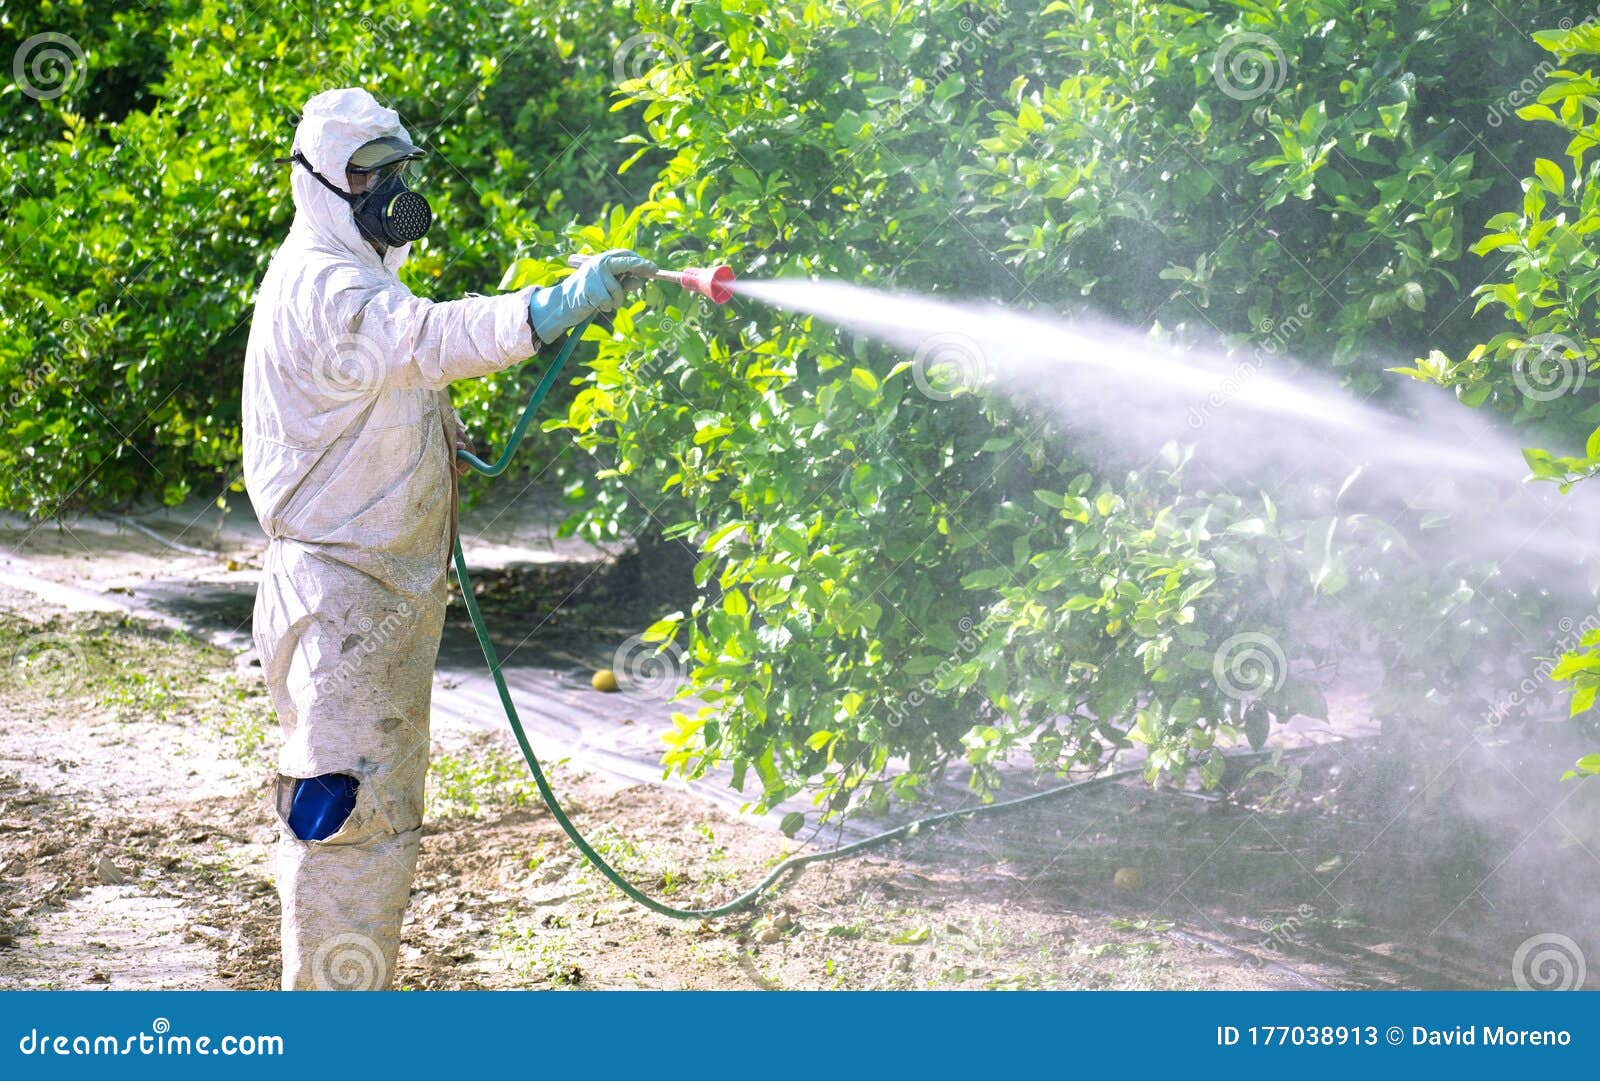 spray pesticides, pesticide on fruit lemon in growing agricultural plantation, spain. man spraying or fumigating pesti, pest